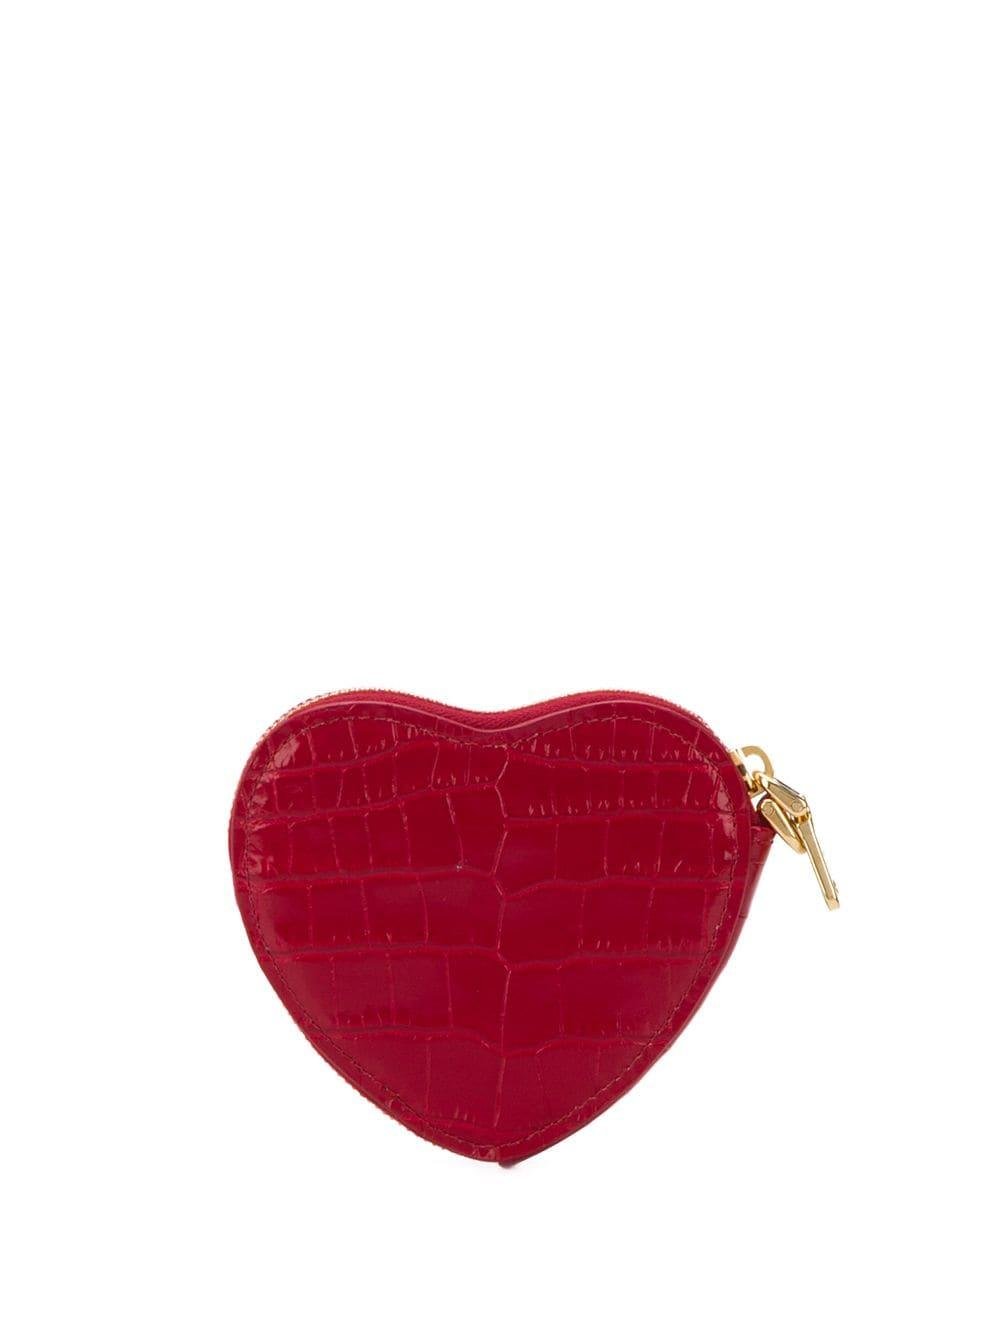 heart shaped coin bag